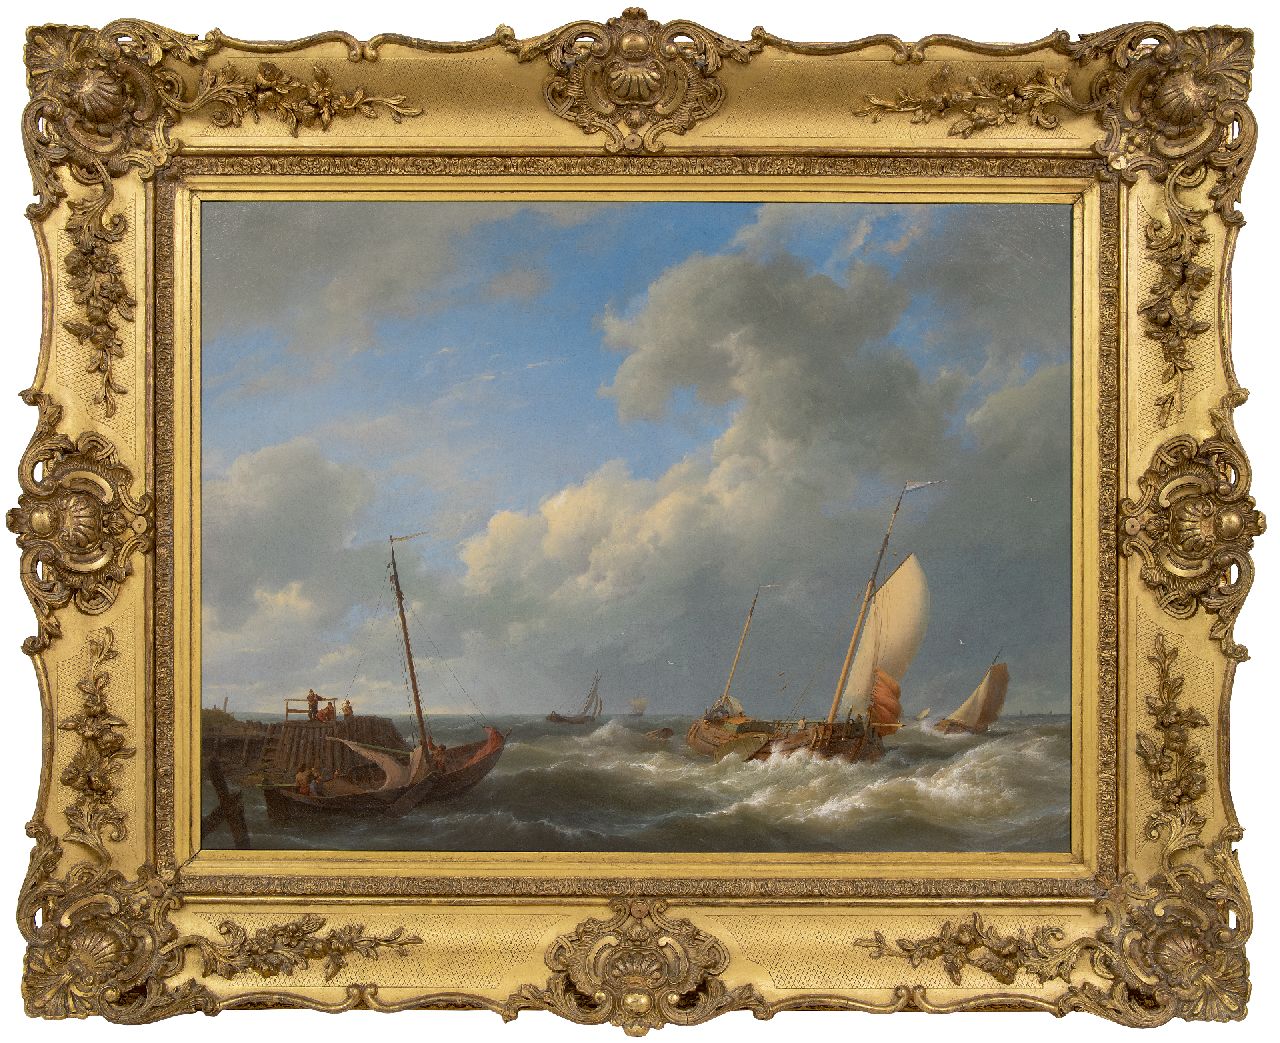 Koekkoek H.  | Hermanus Koekkoek | Paintings offered for sale | Sailing ships in a rising storm, oil on canvas 63.9 x 85.4 cm